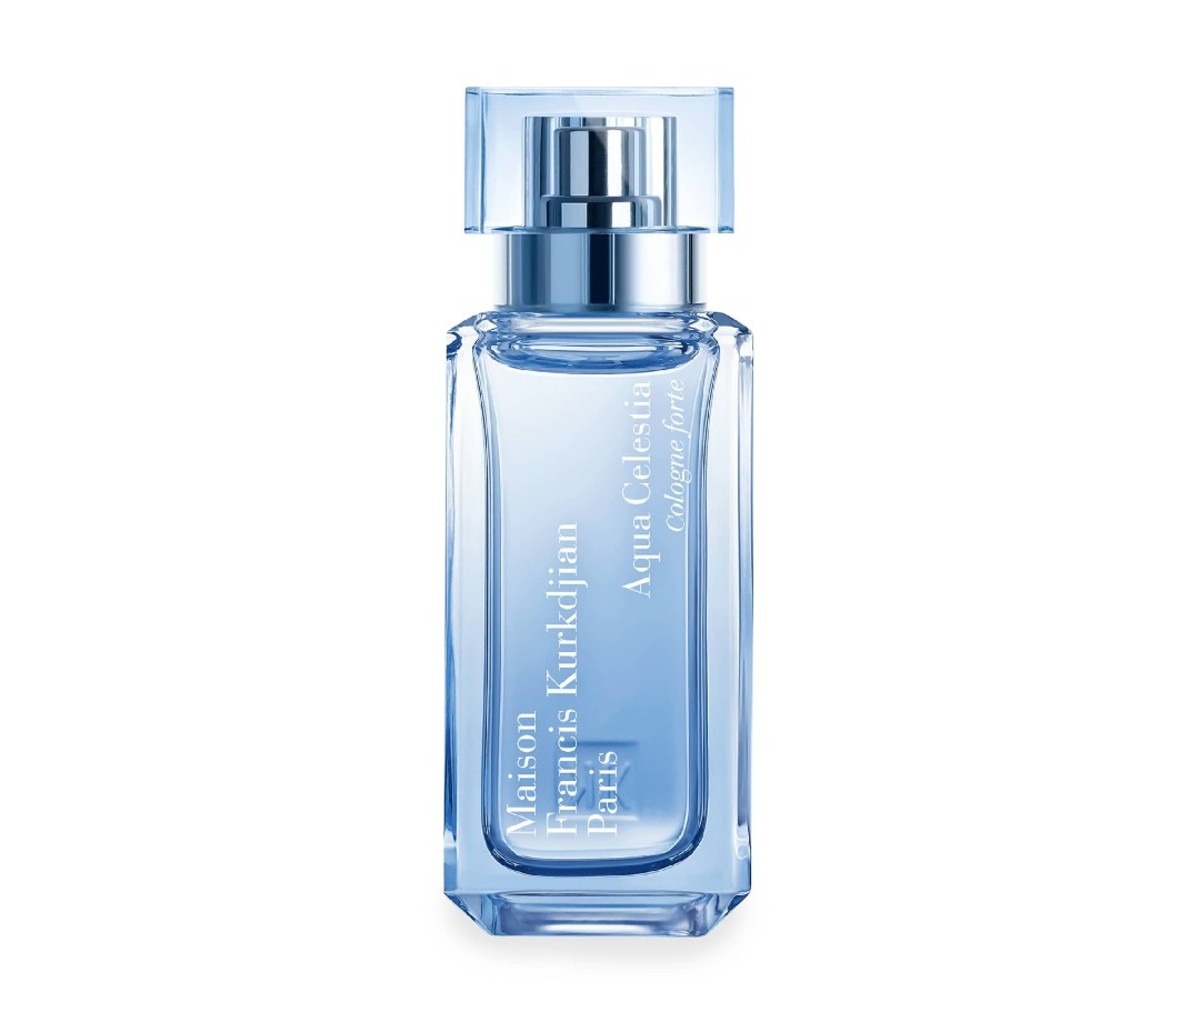 A bottle of Maison Francis Kurkdjian Aqua Celestia Cologne Forte—Eau de Parfum.